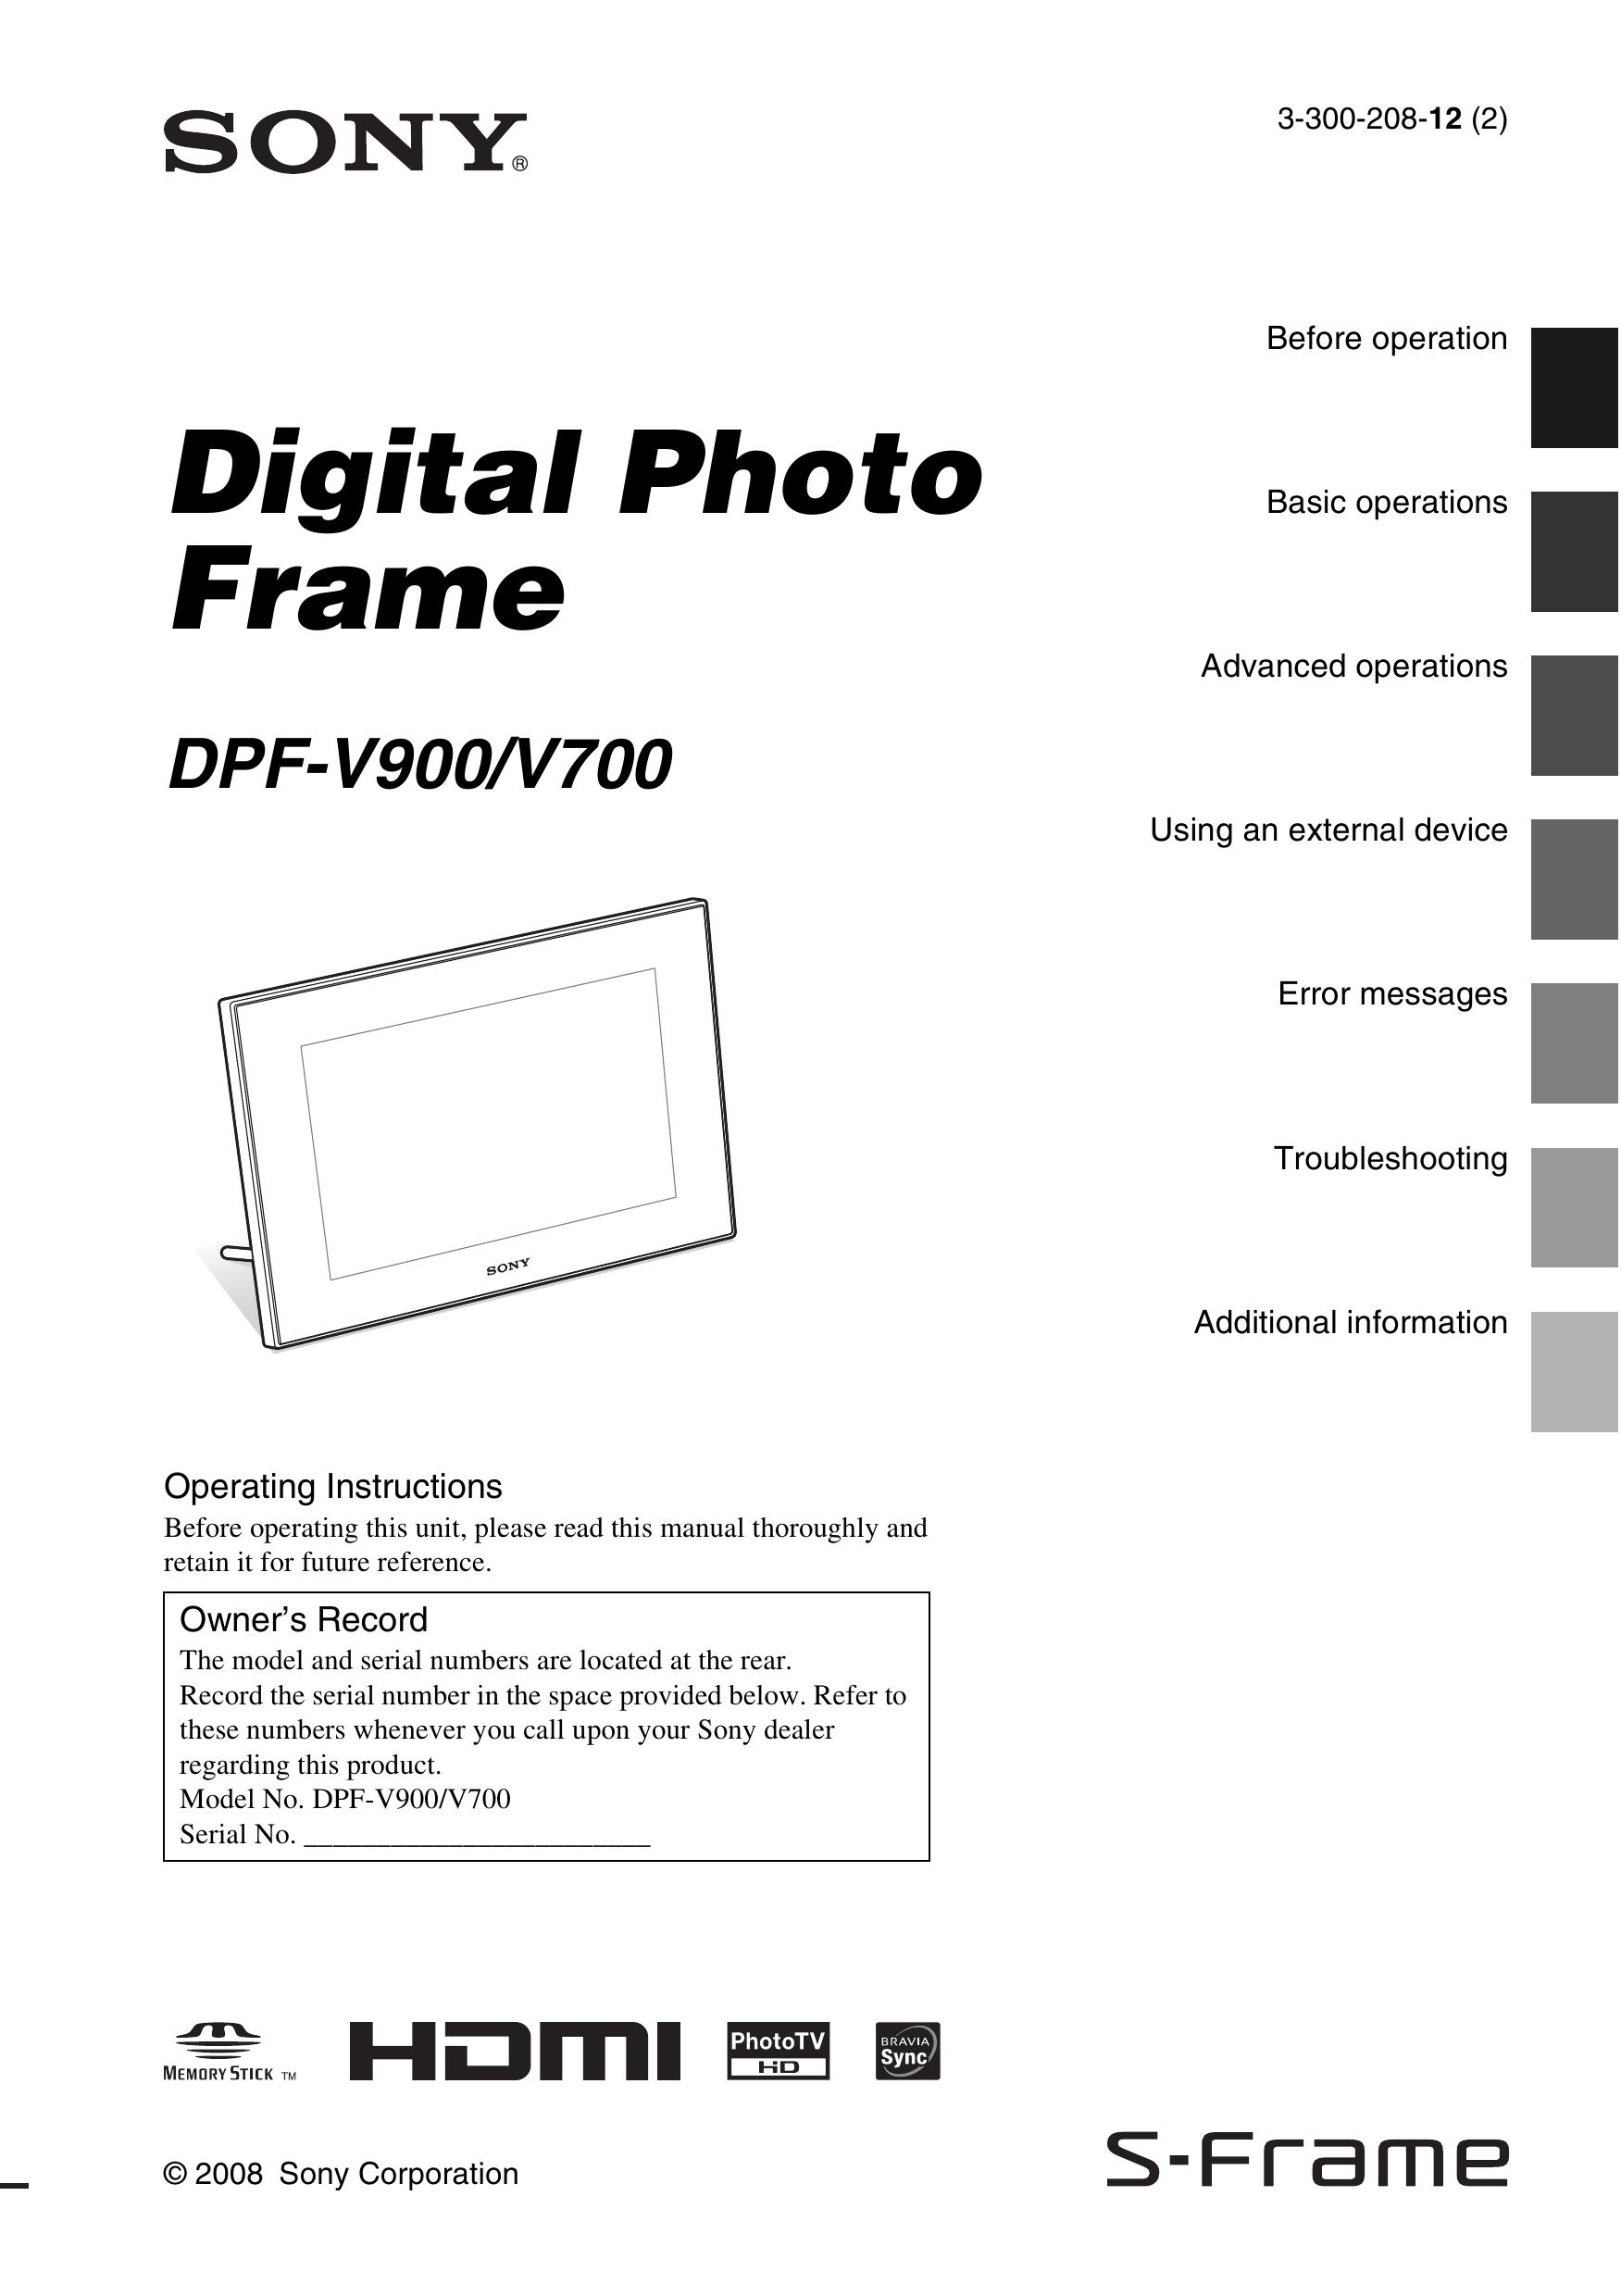 Sony DPF-V900/V700 Digital Photo Frame User Manual